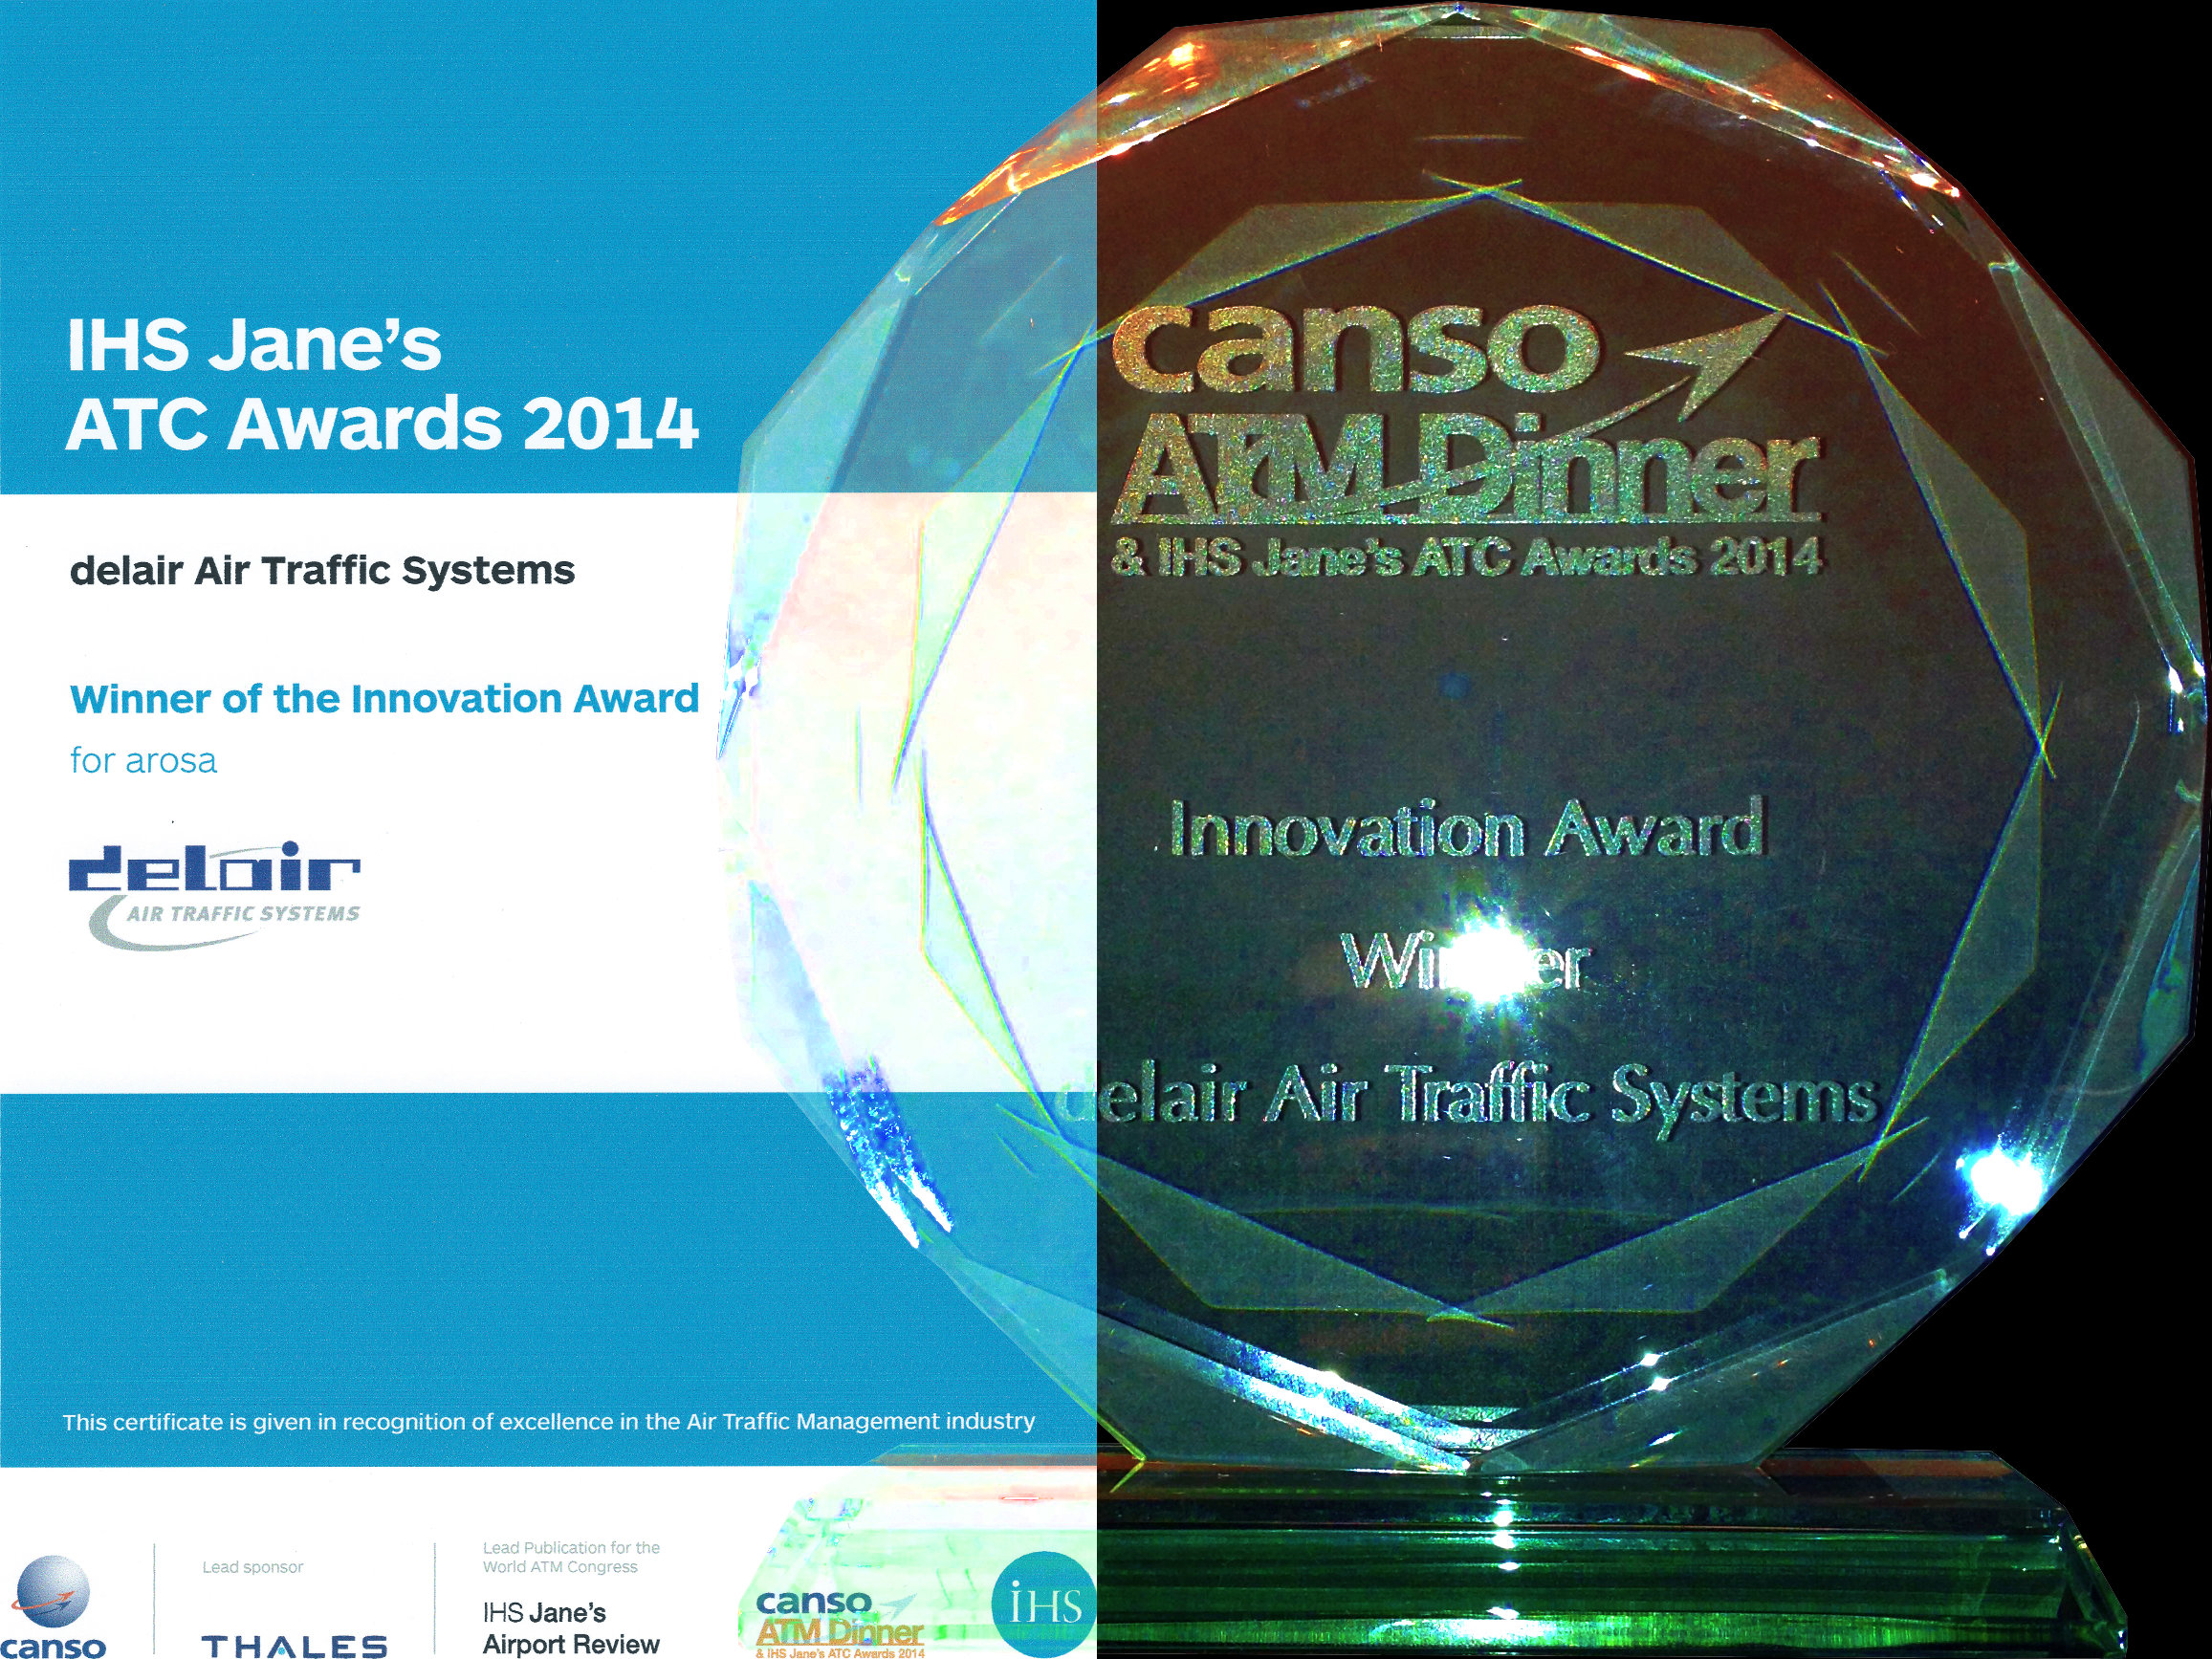 IHS Jane's ATC Innovation Award 2014